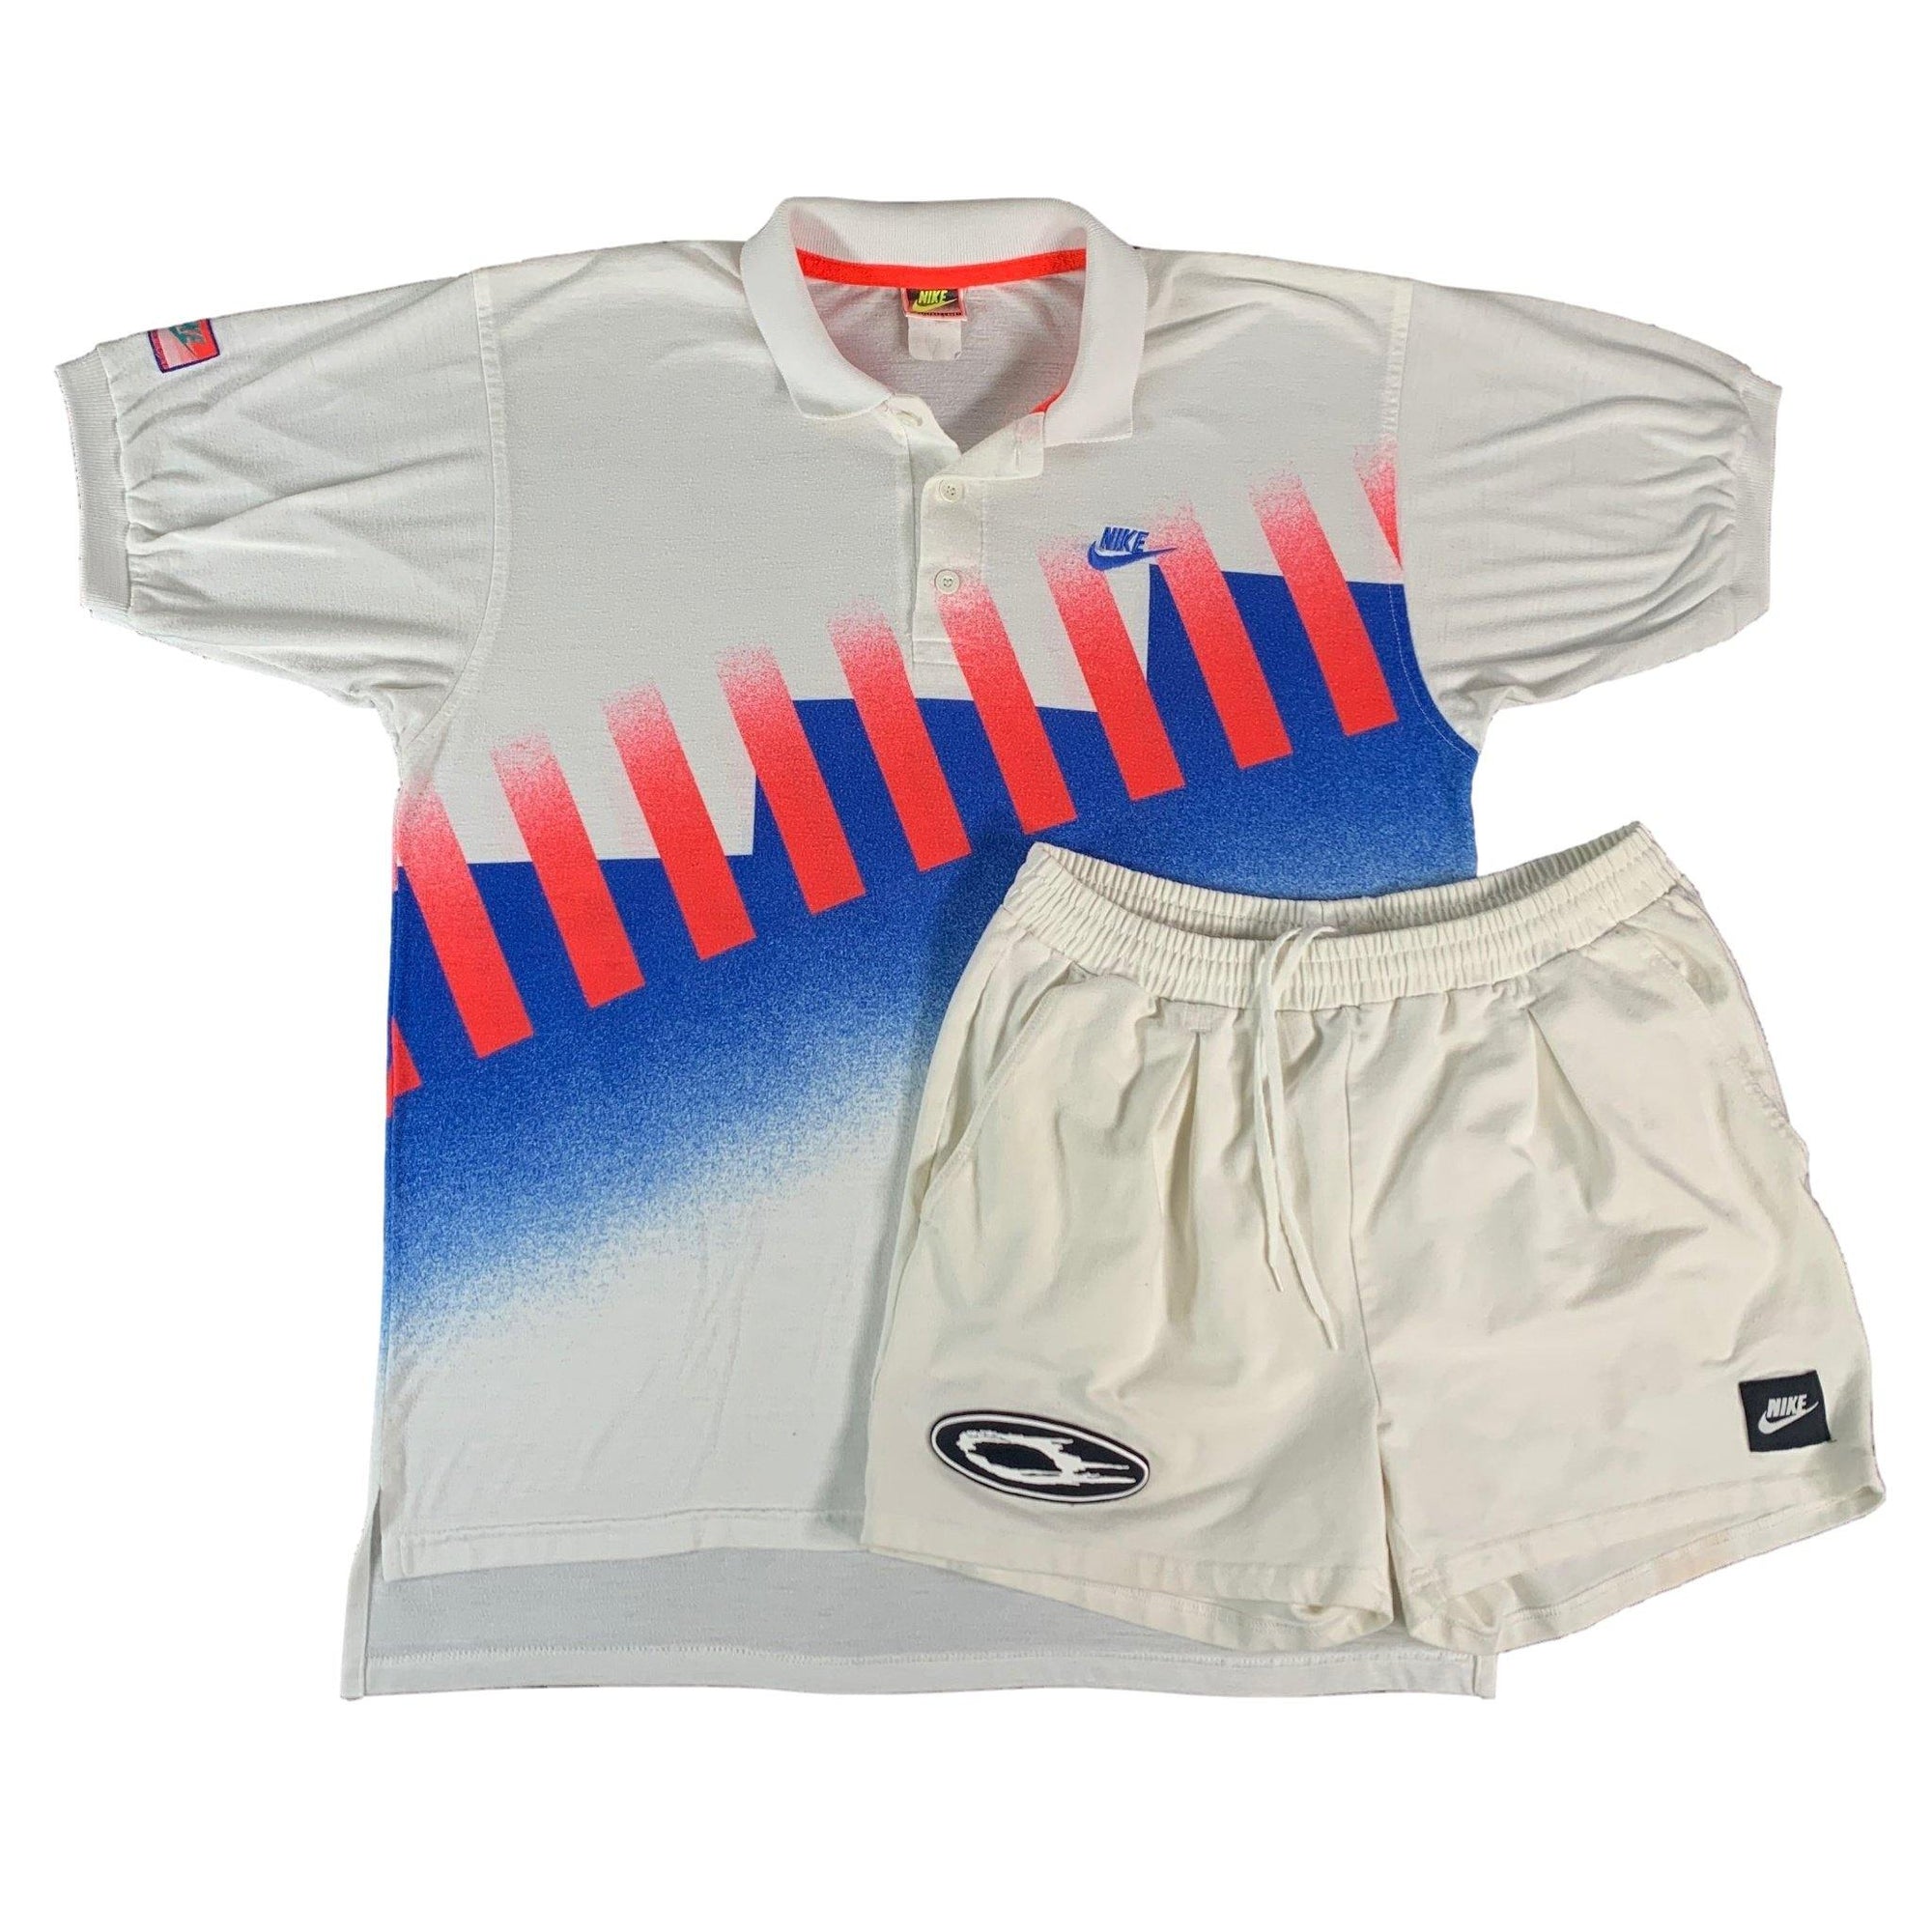 Vintage Nike Challenge Court "Andre Agassi" Kit - jointcustodydc